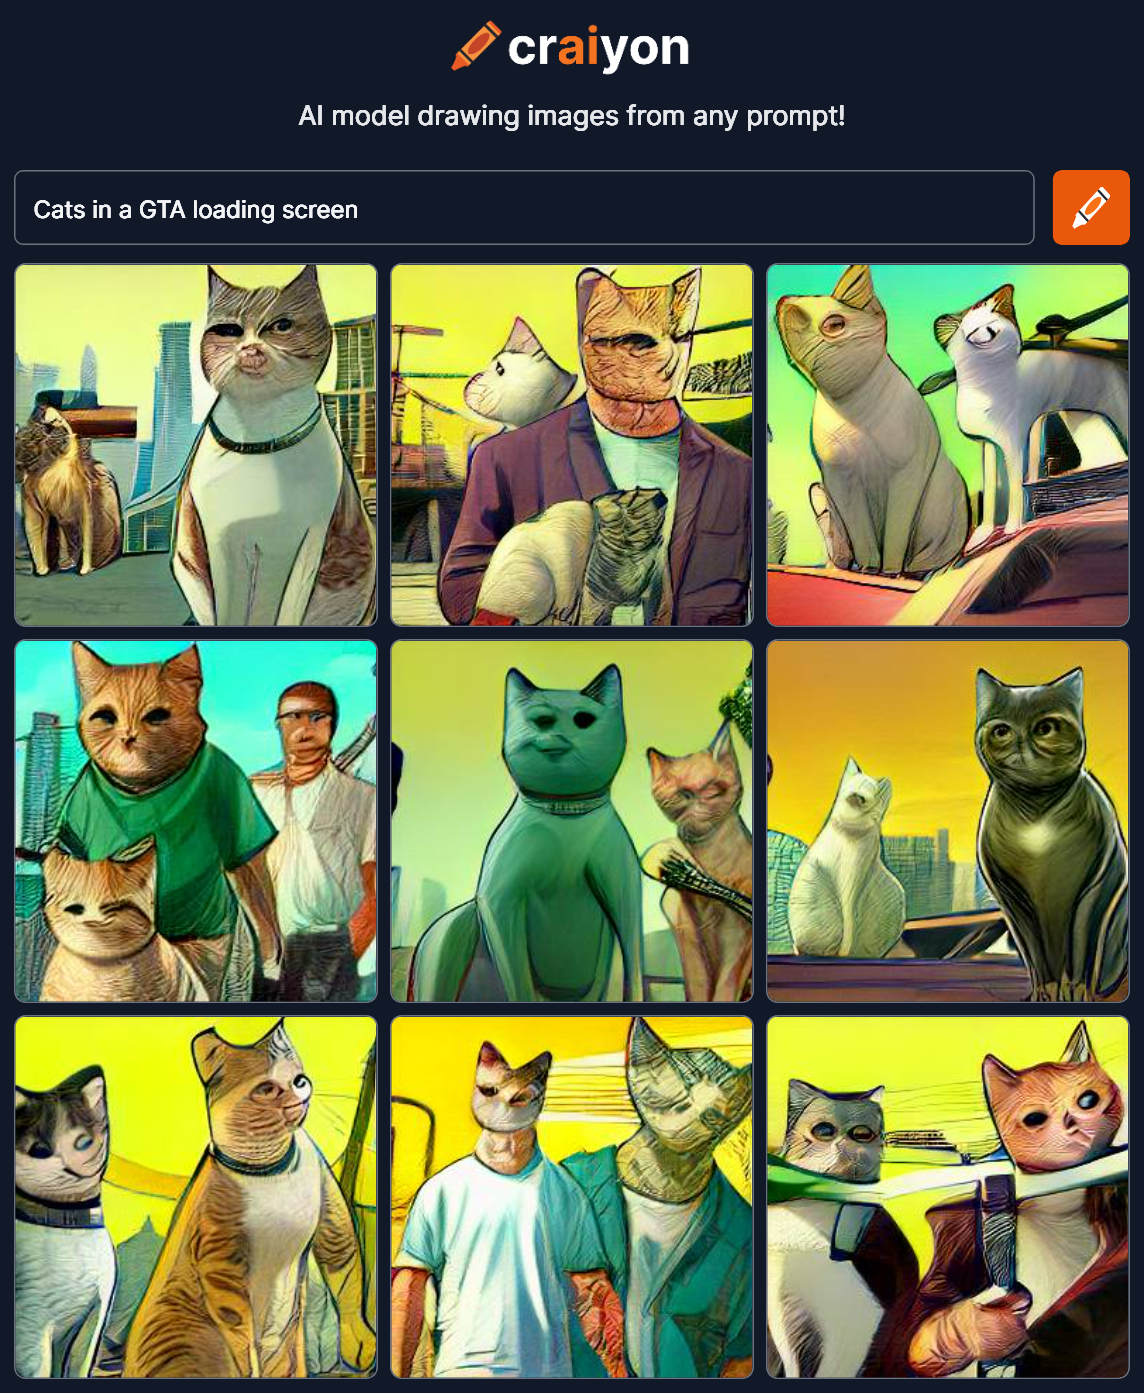 craiyon_234831_Cats_in_a_GTA_loading_screen.jpg